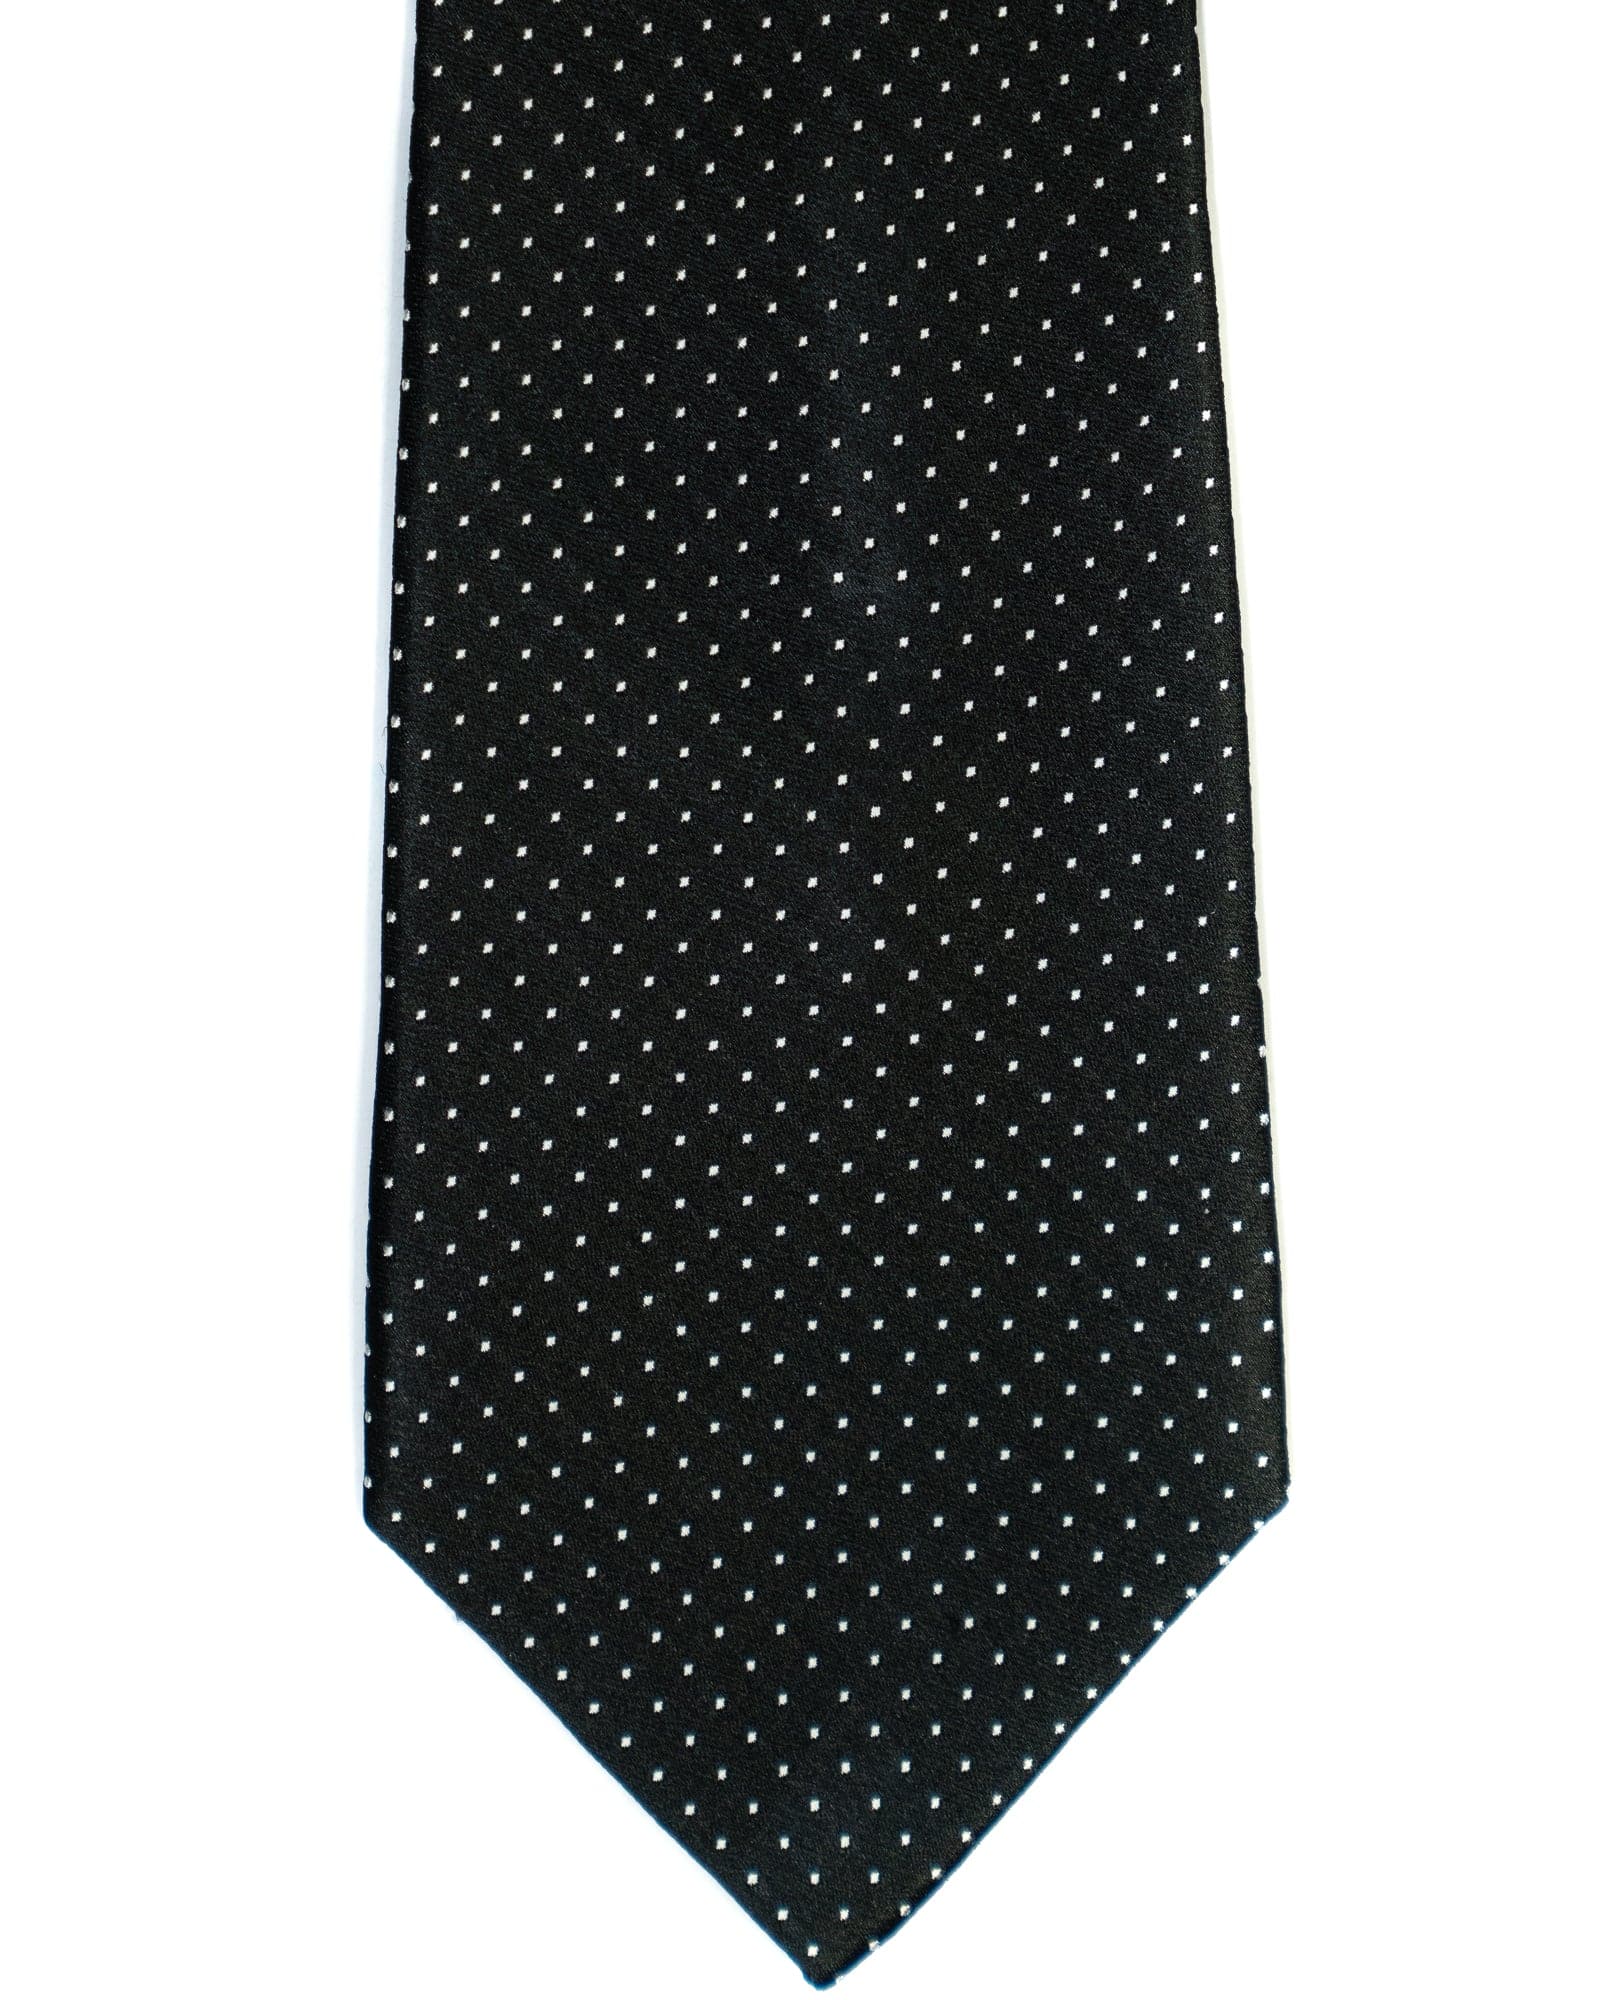 Silk Tie In Black Pin Dot Print - Rainwater's Men's Clothing and Tuxedo Rental